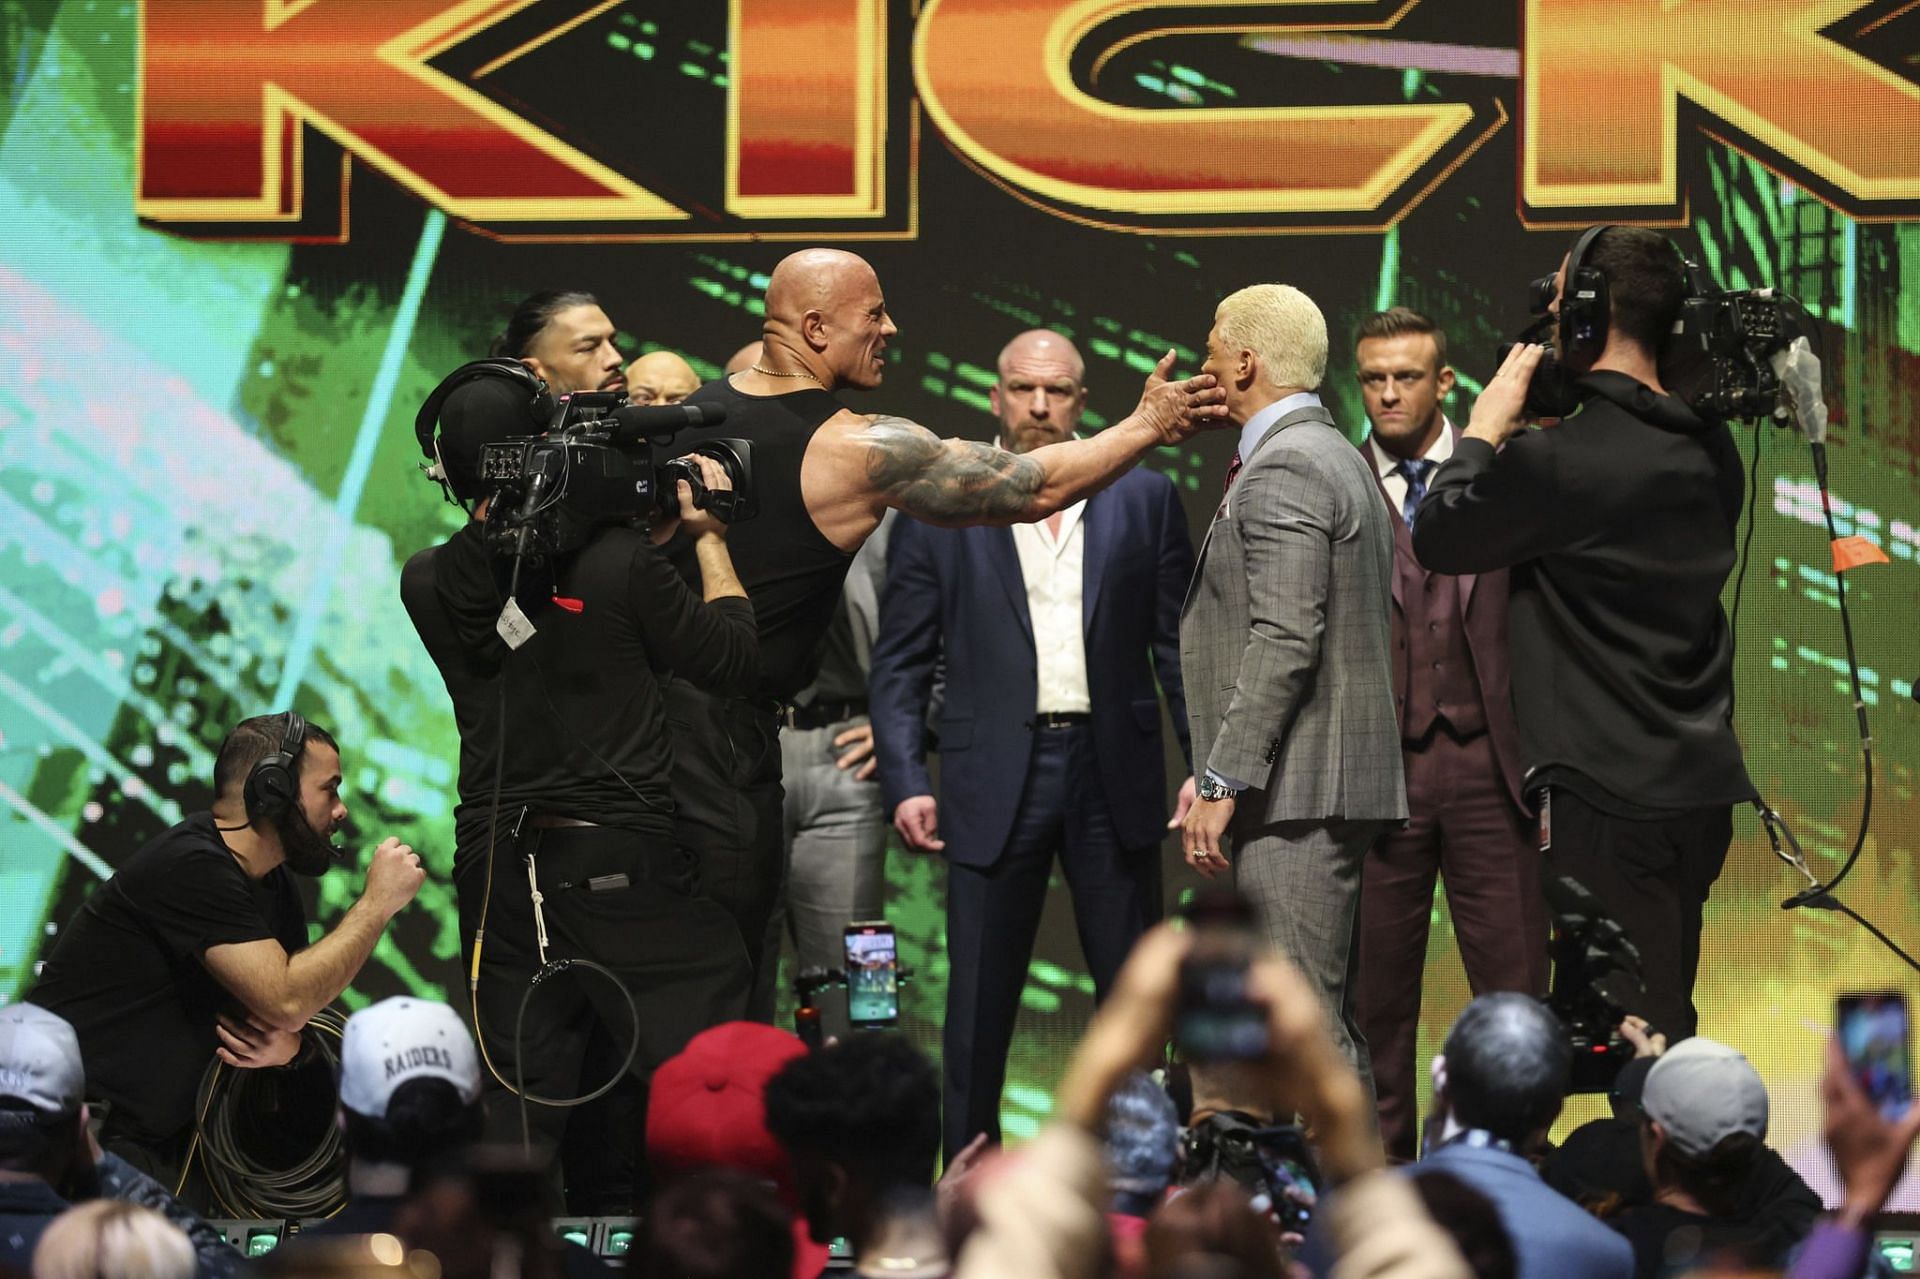 The Rock slaps Cody Rhodes at the WrestleMania Kick-off presser.